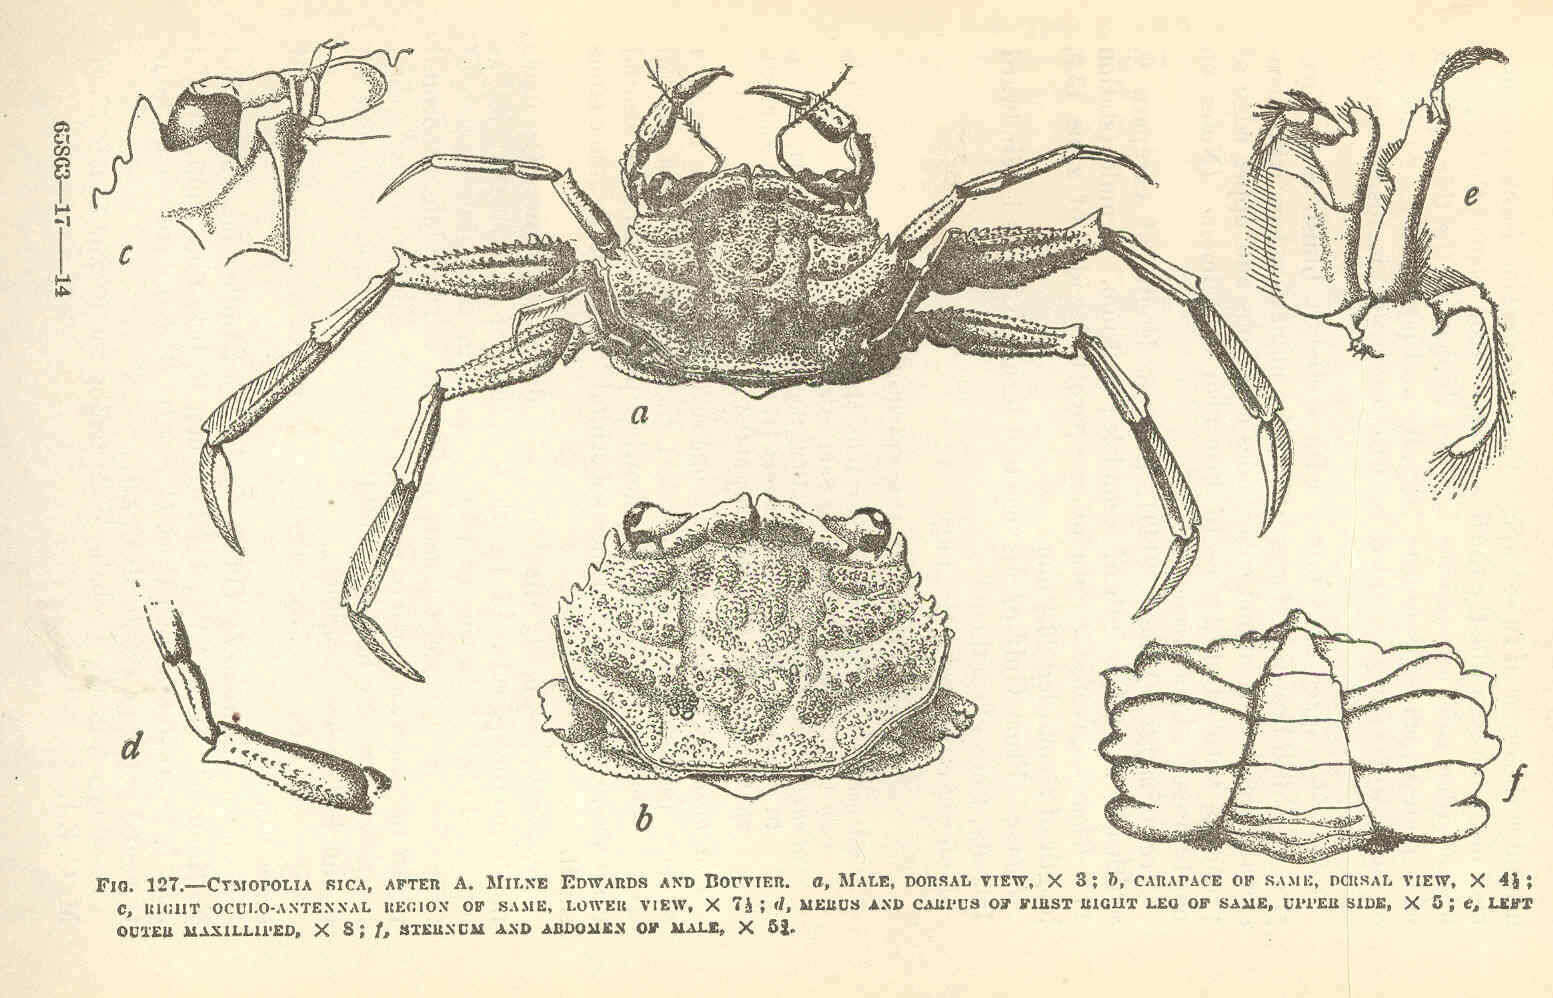 Image of Palicoidea Bouvier 1898